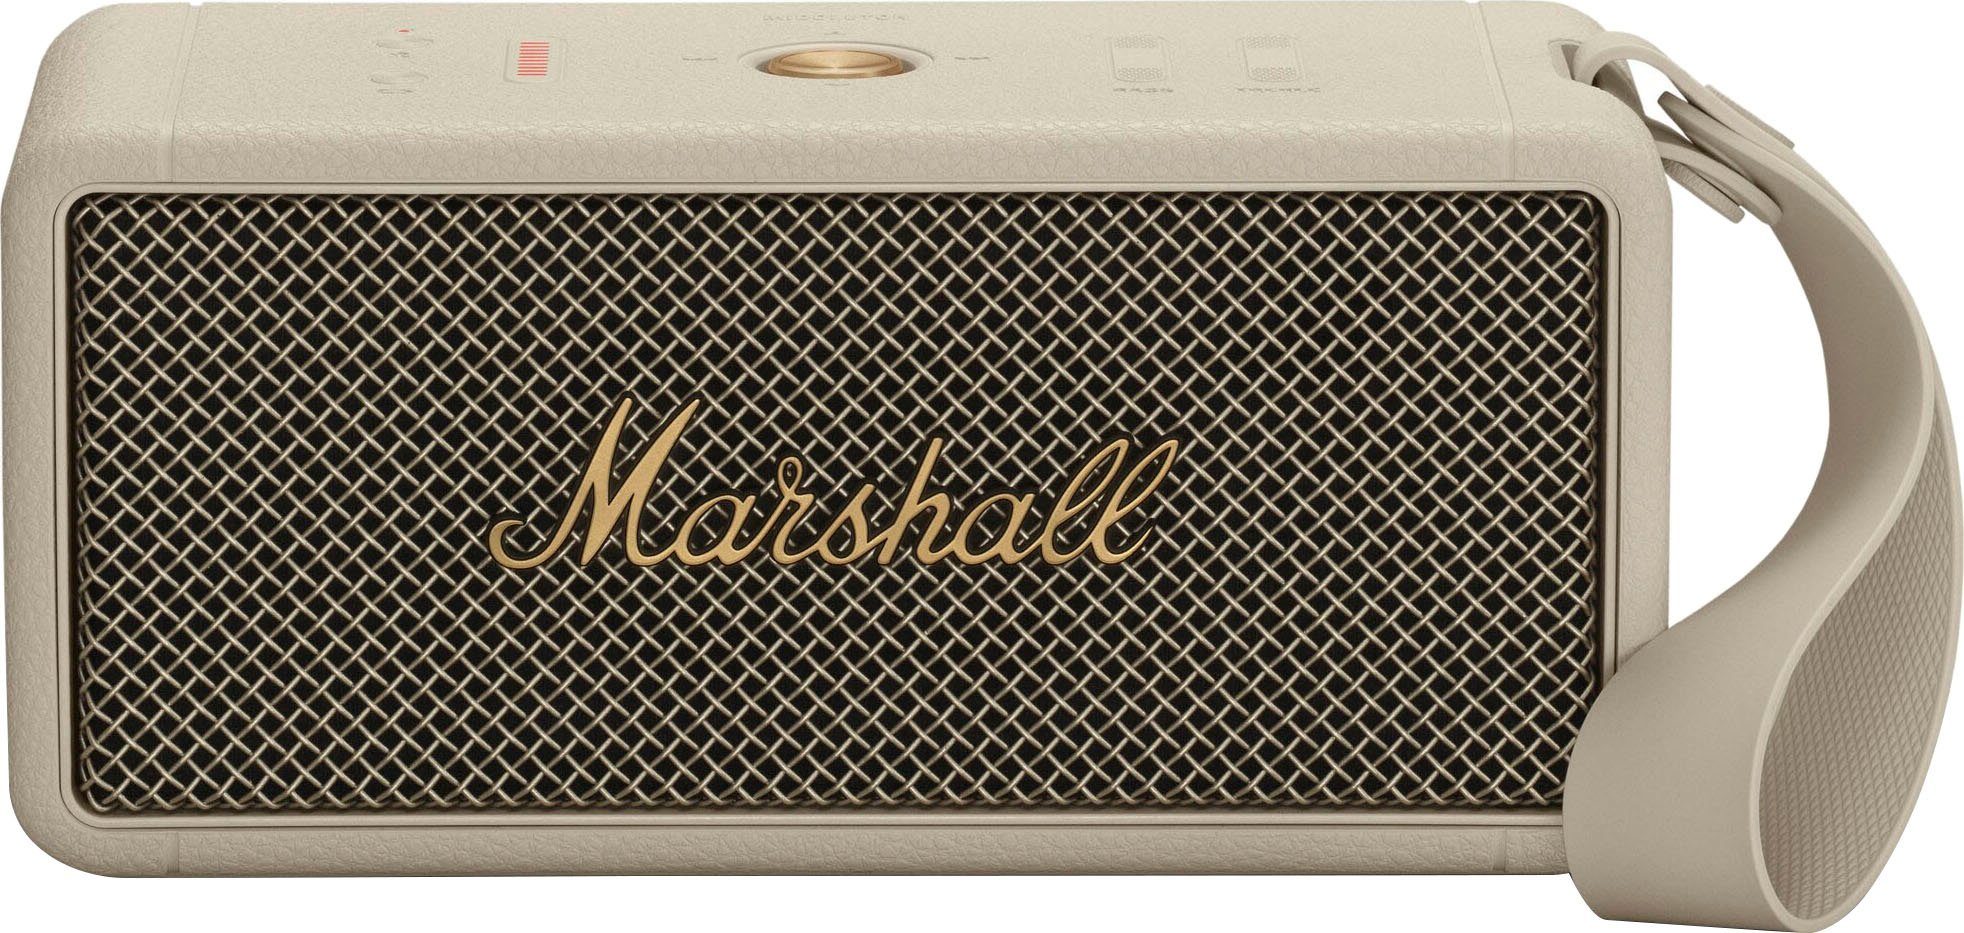 Marshall Middleton Stereo (Bluetooth, Cream Lautsprecher 110 W)